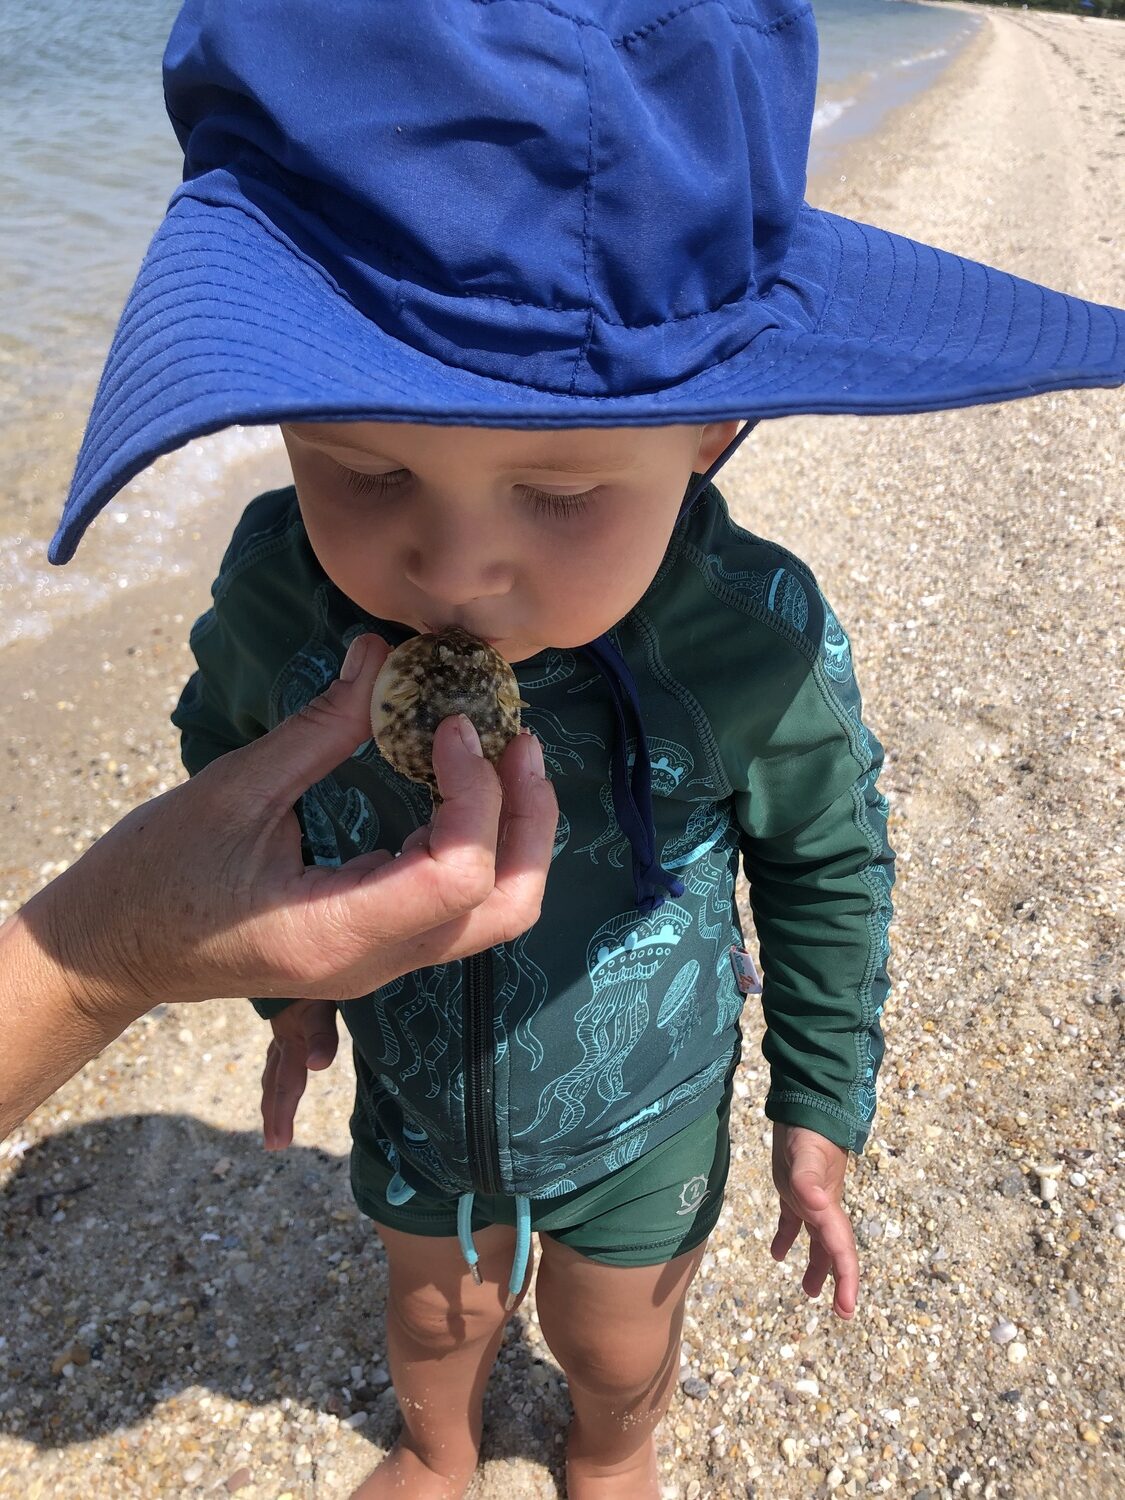 The author’s little grandson, Bennett, enjoys an encounter with a blowfish.